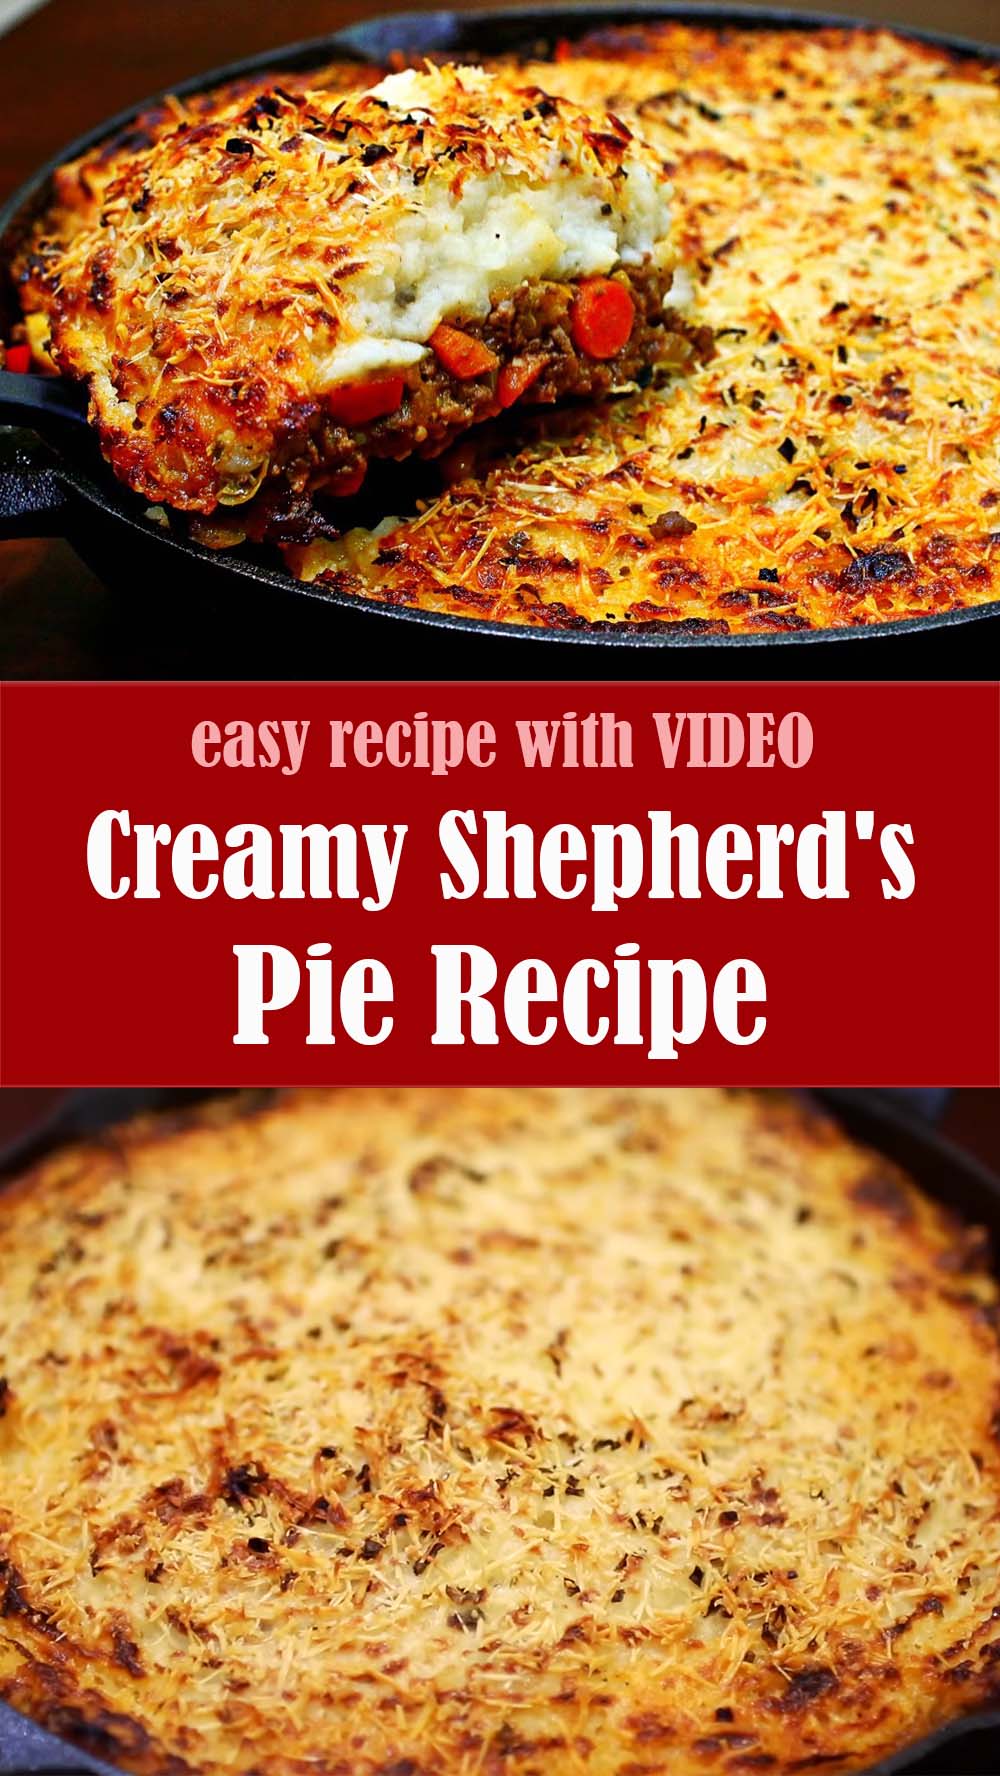 Creamy Shepherd's Pie Recipe